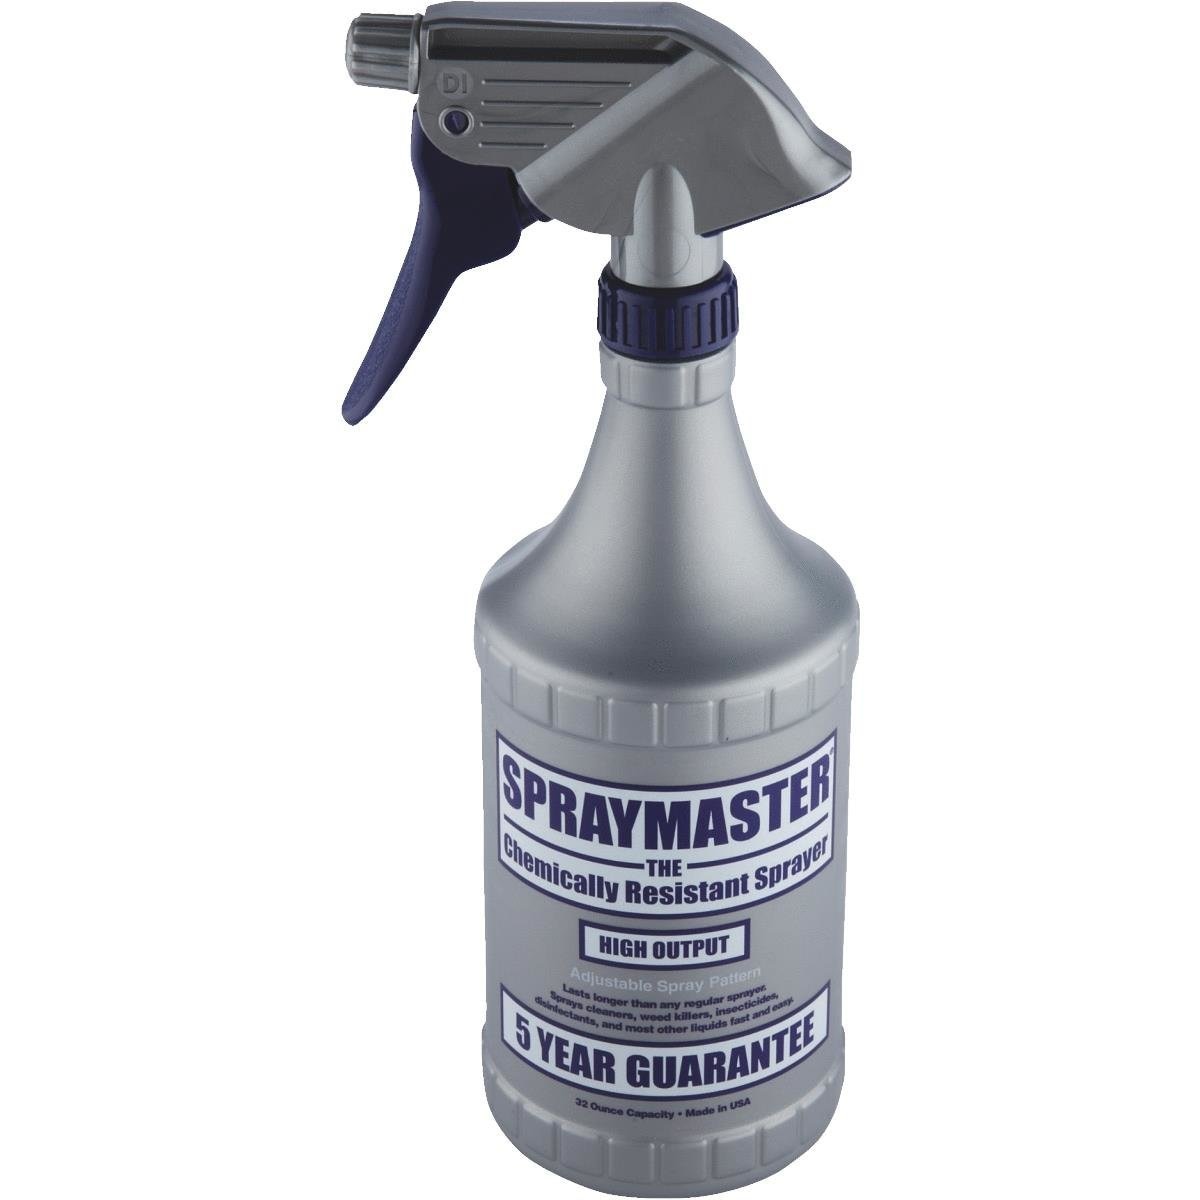 Harris 32 Oz. Chemical Resistant Spray Bottle CR-32, 32Oz. - Harris Teeter